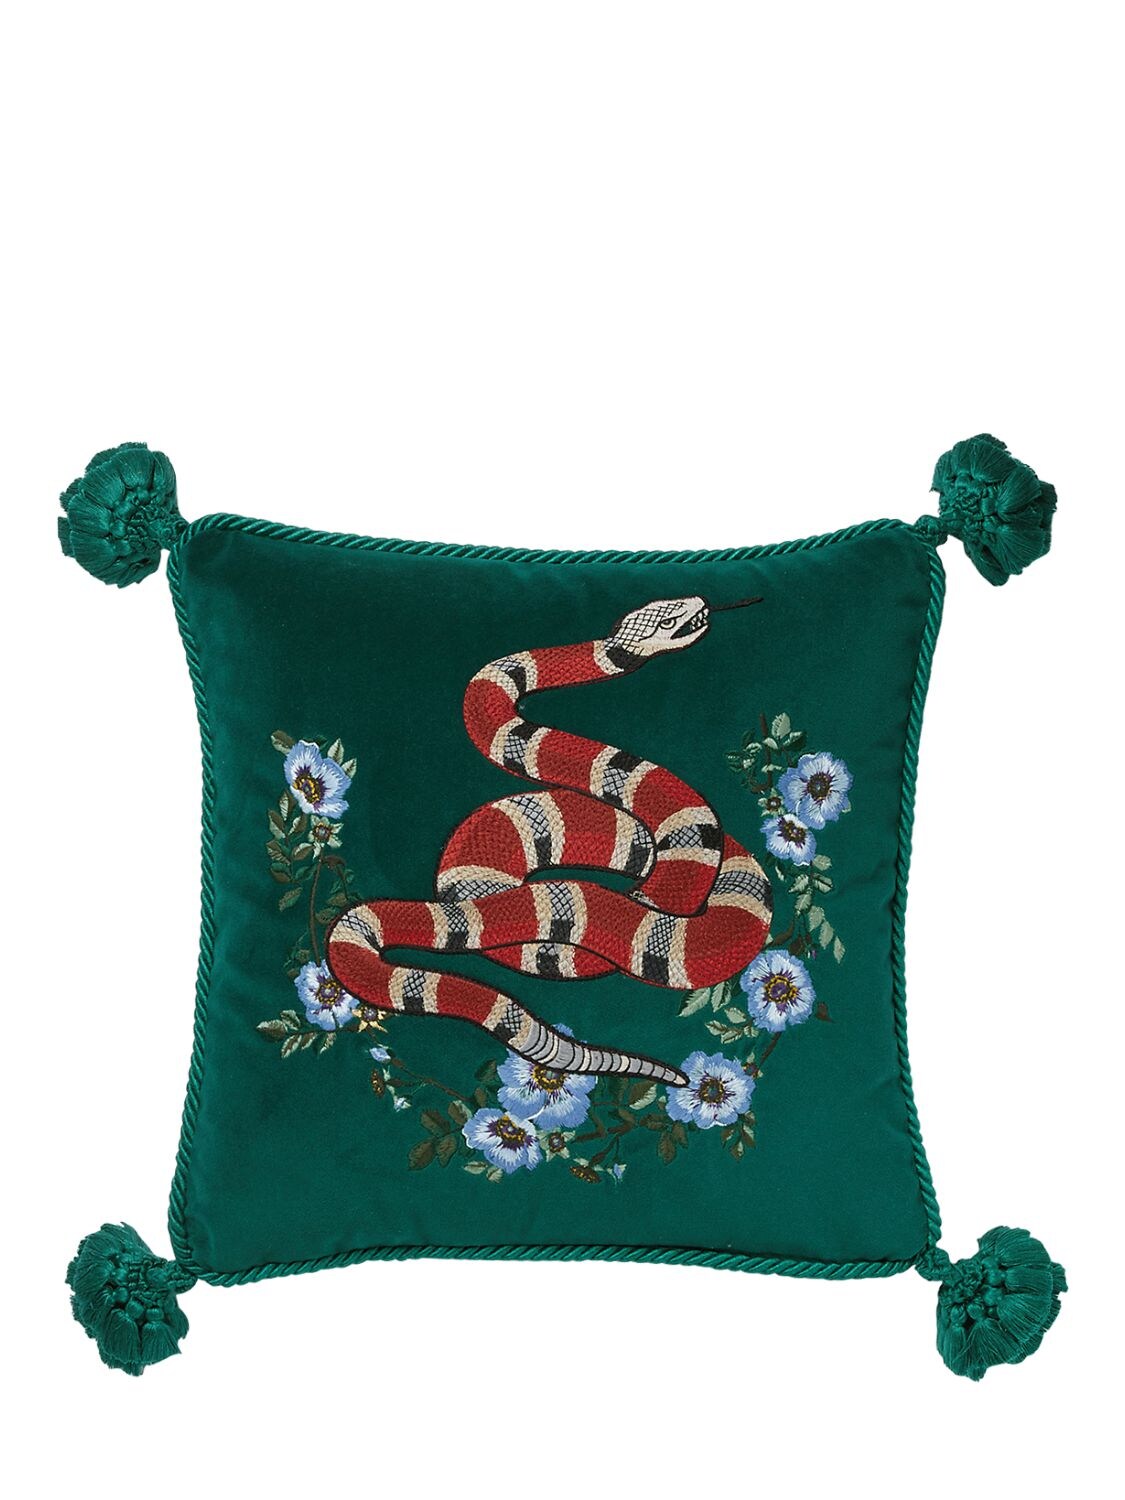 GUCCI 蛇刺绣天鹅绒抱枕,68IWNI012-MZYWOA2